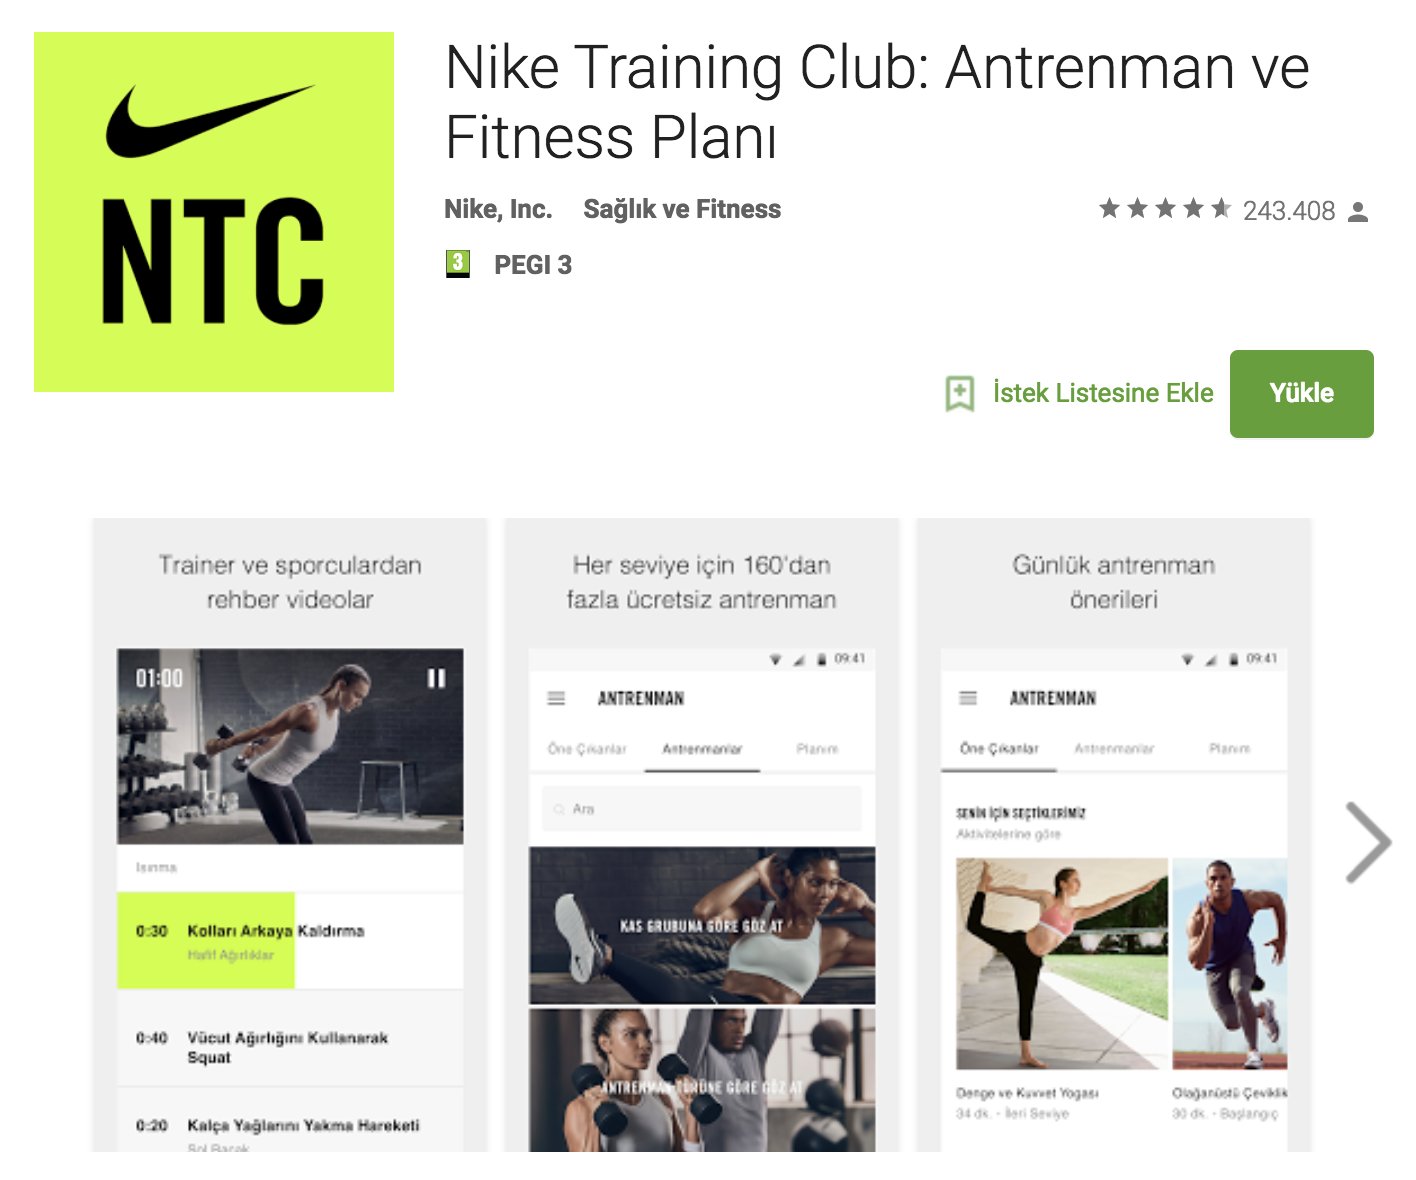 Nike Training Club: Antrenman ve Fitness Planı